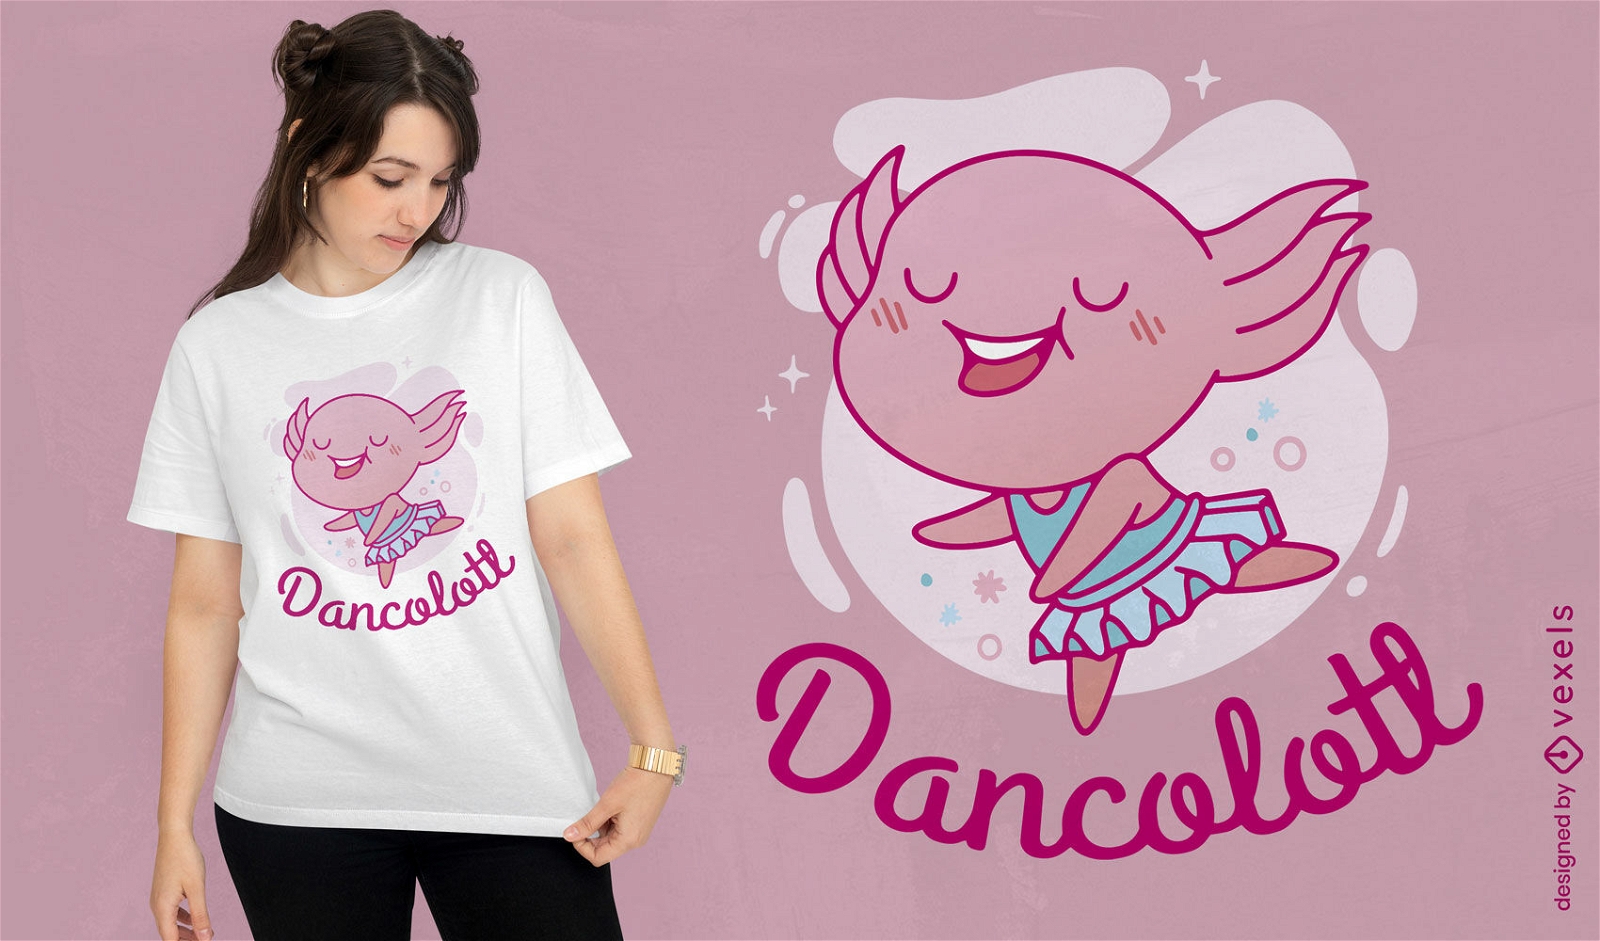 Dancing axolotl t-shirt design